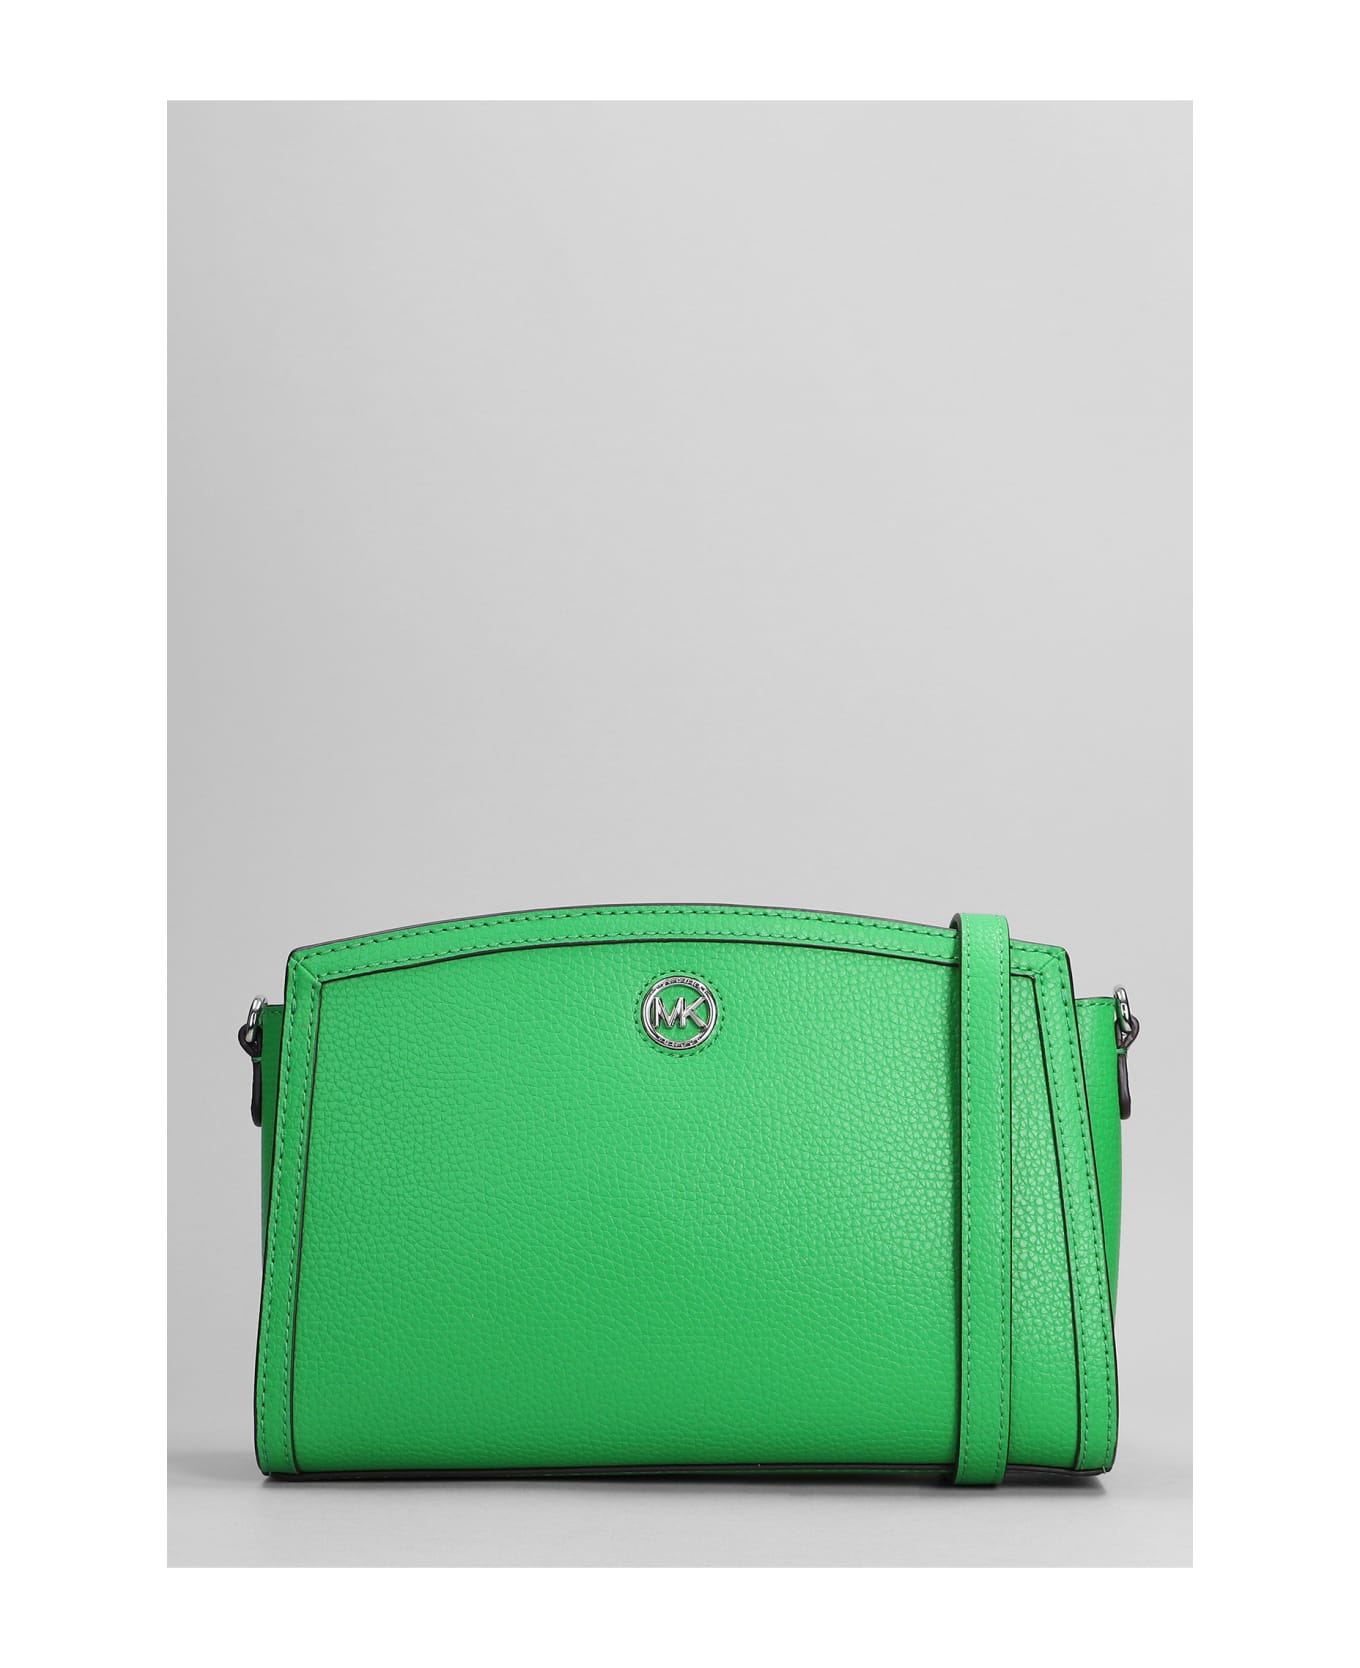 Michael Kors Chantal Shoulder Bag In Green Leather - green